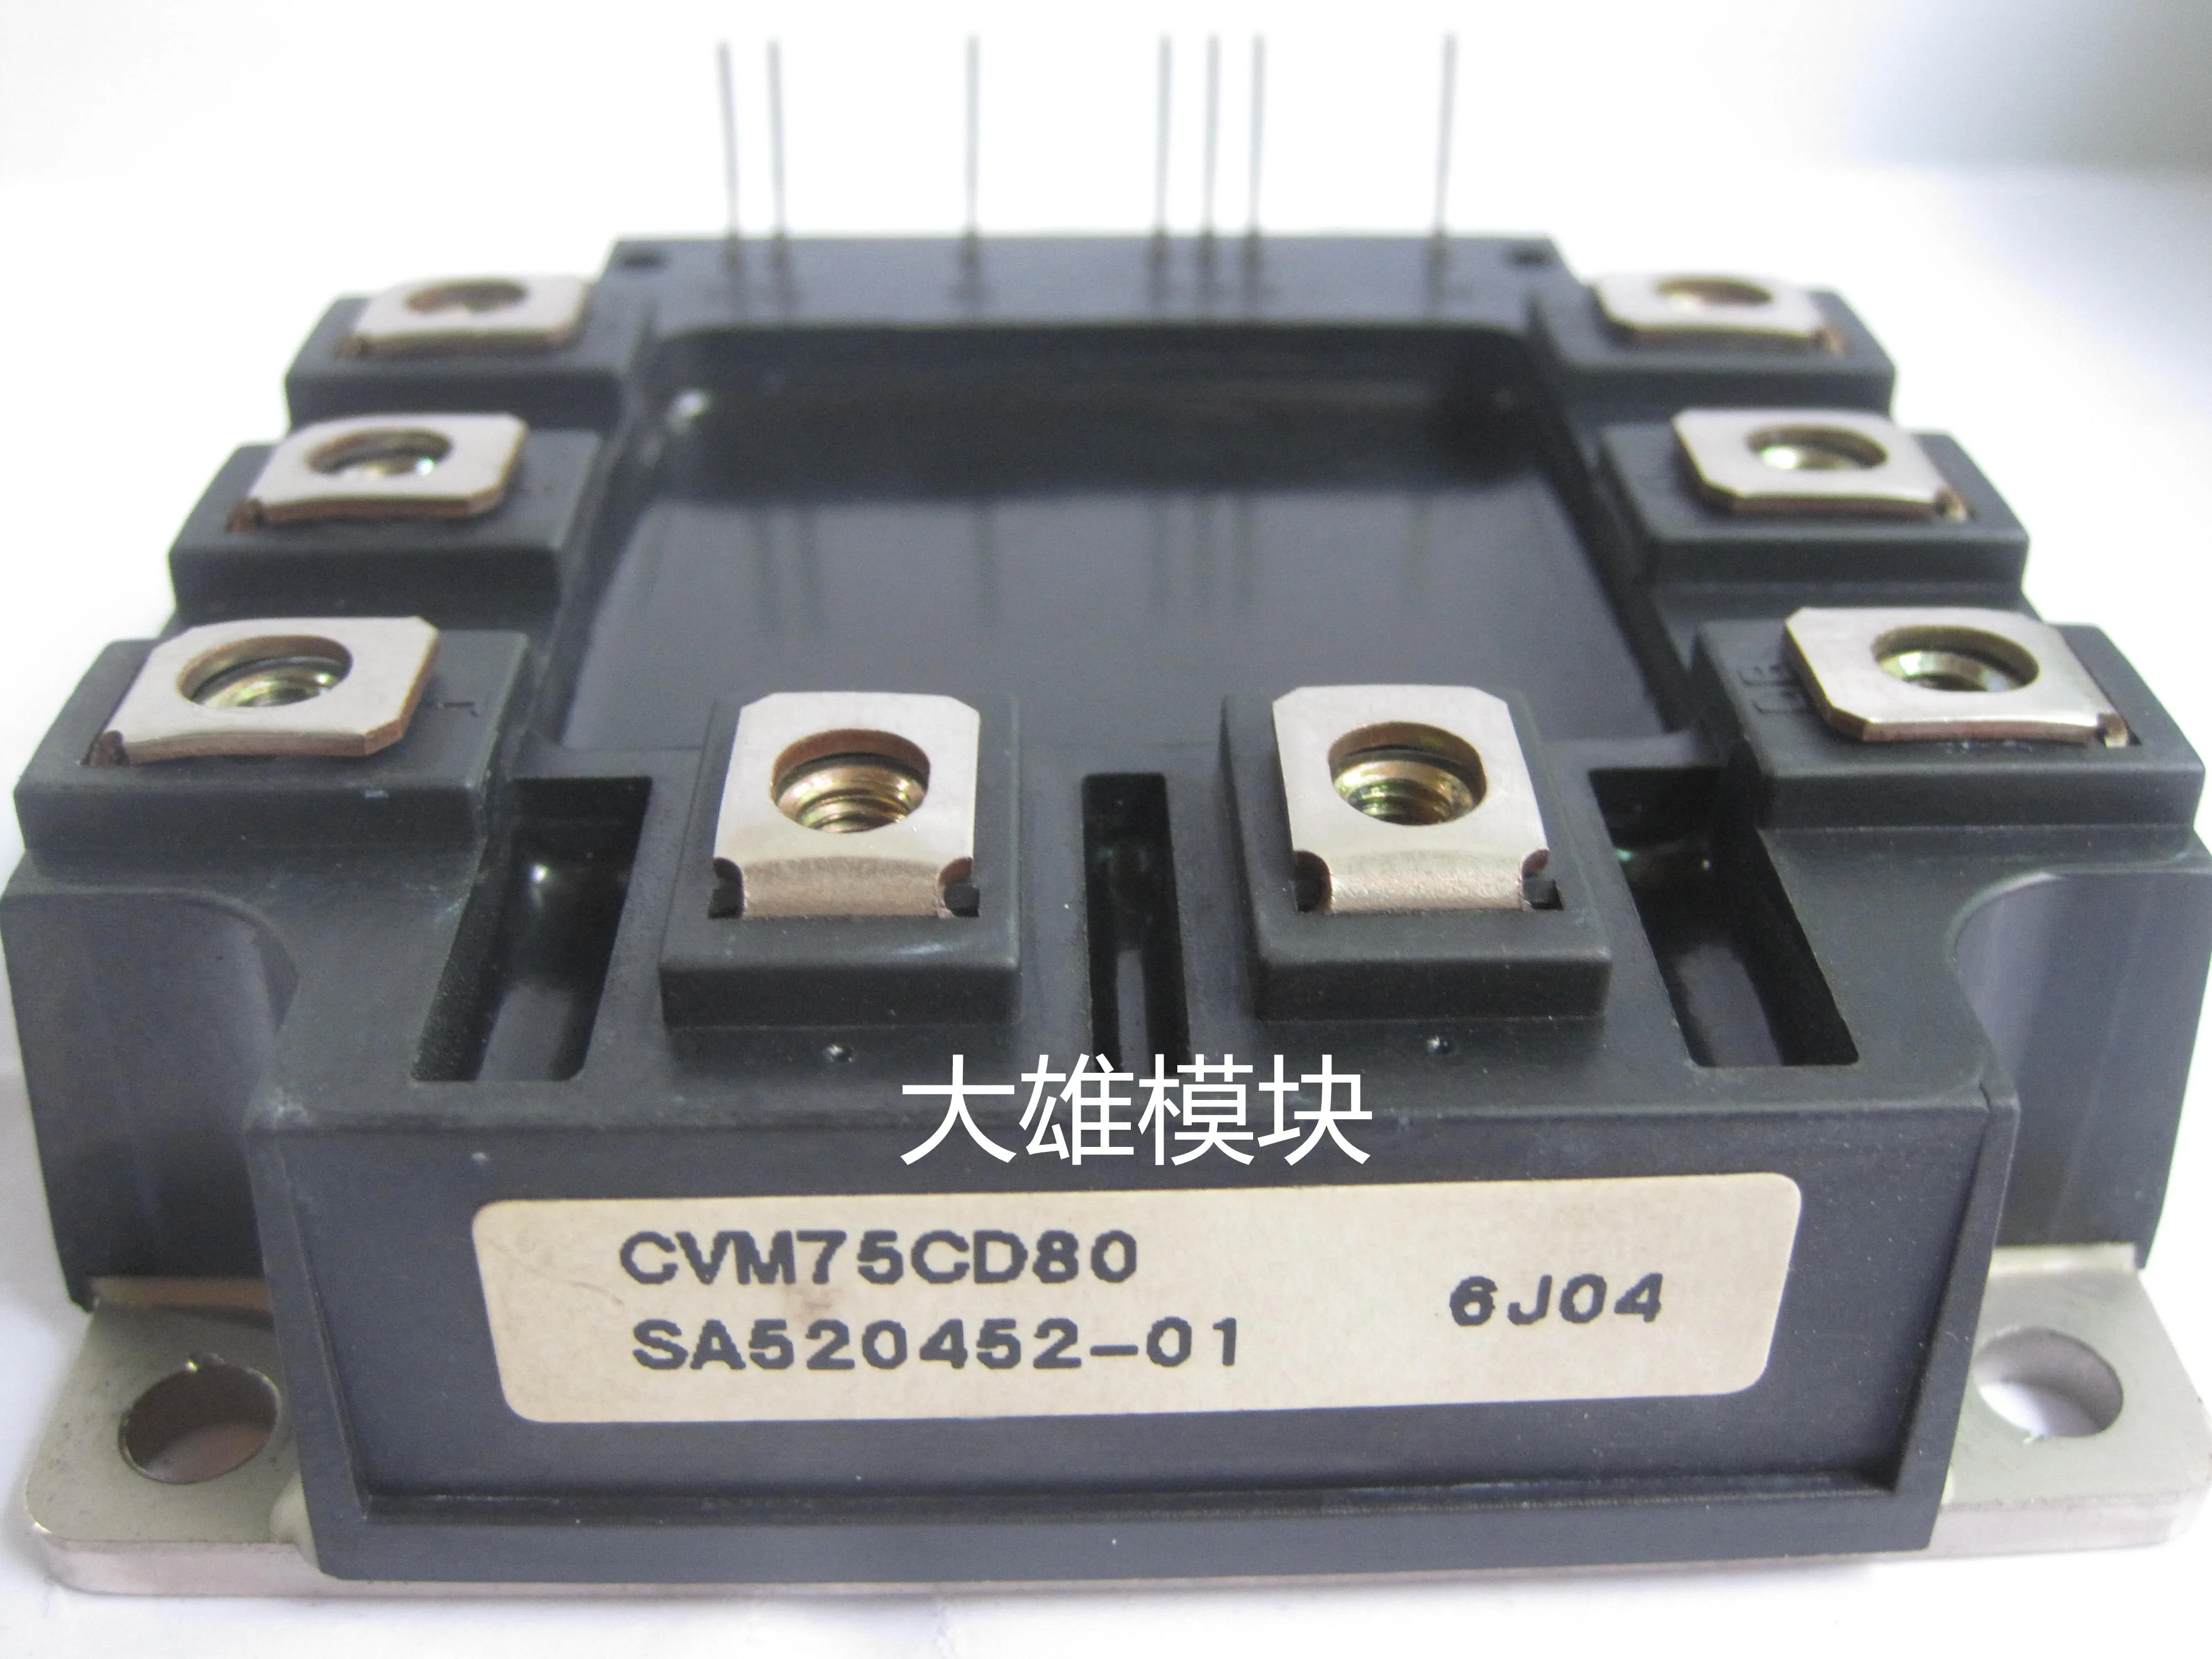 

CVM75CD80 SA520452-01 Original, Can Provide Test, 1 Year Warranty